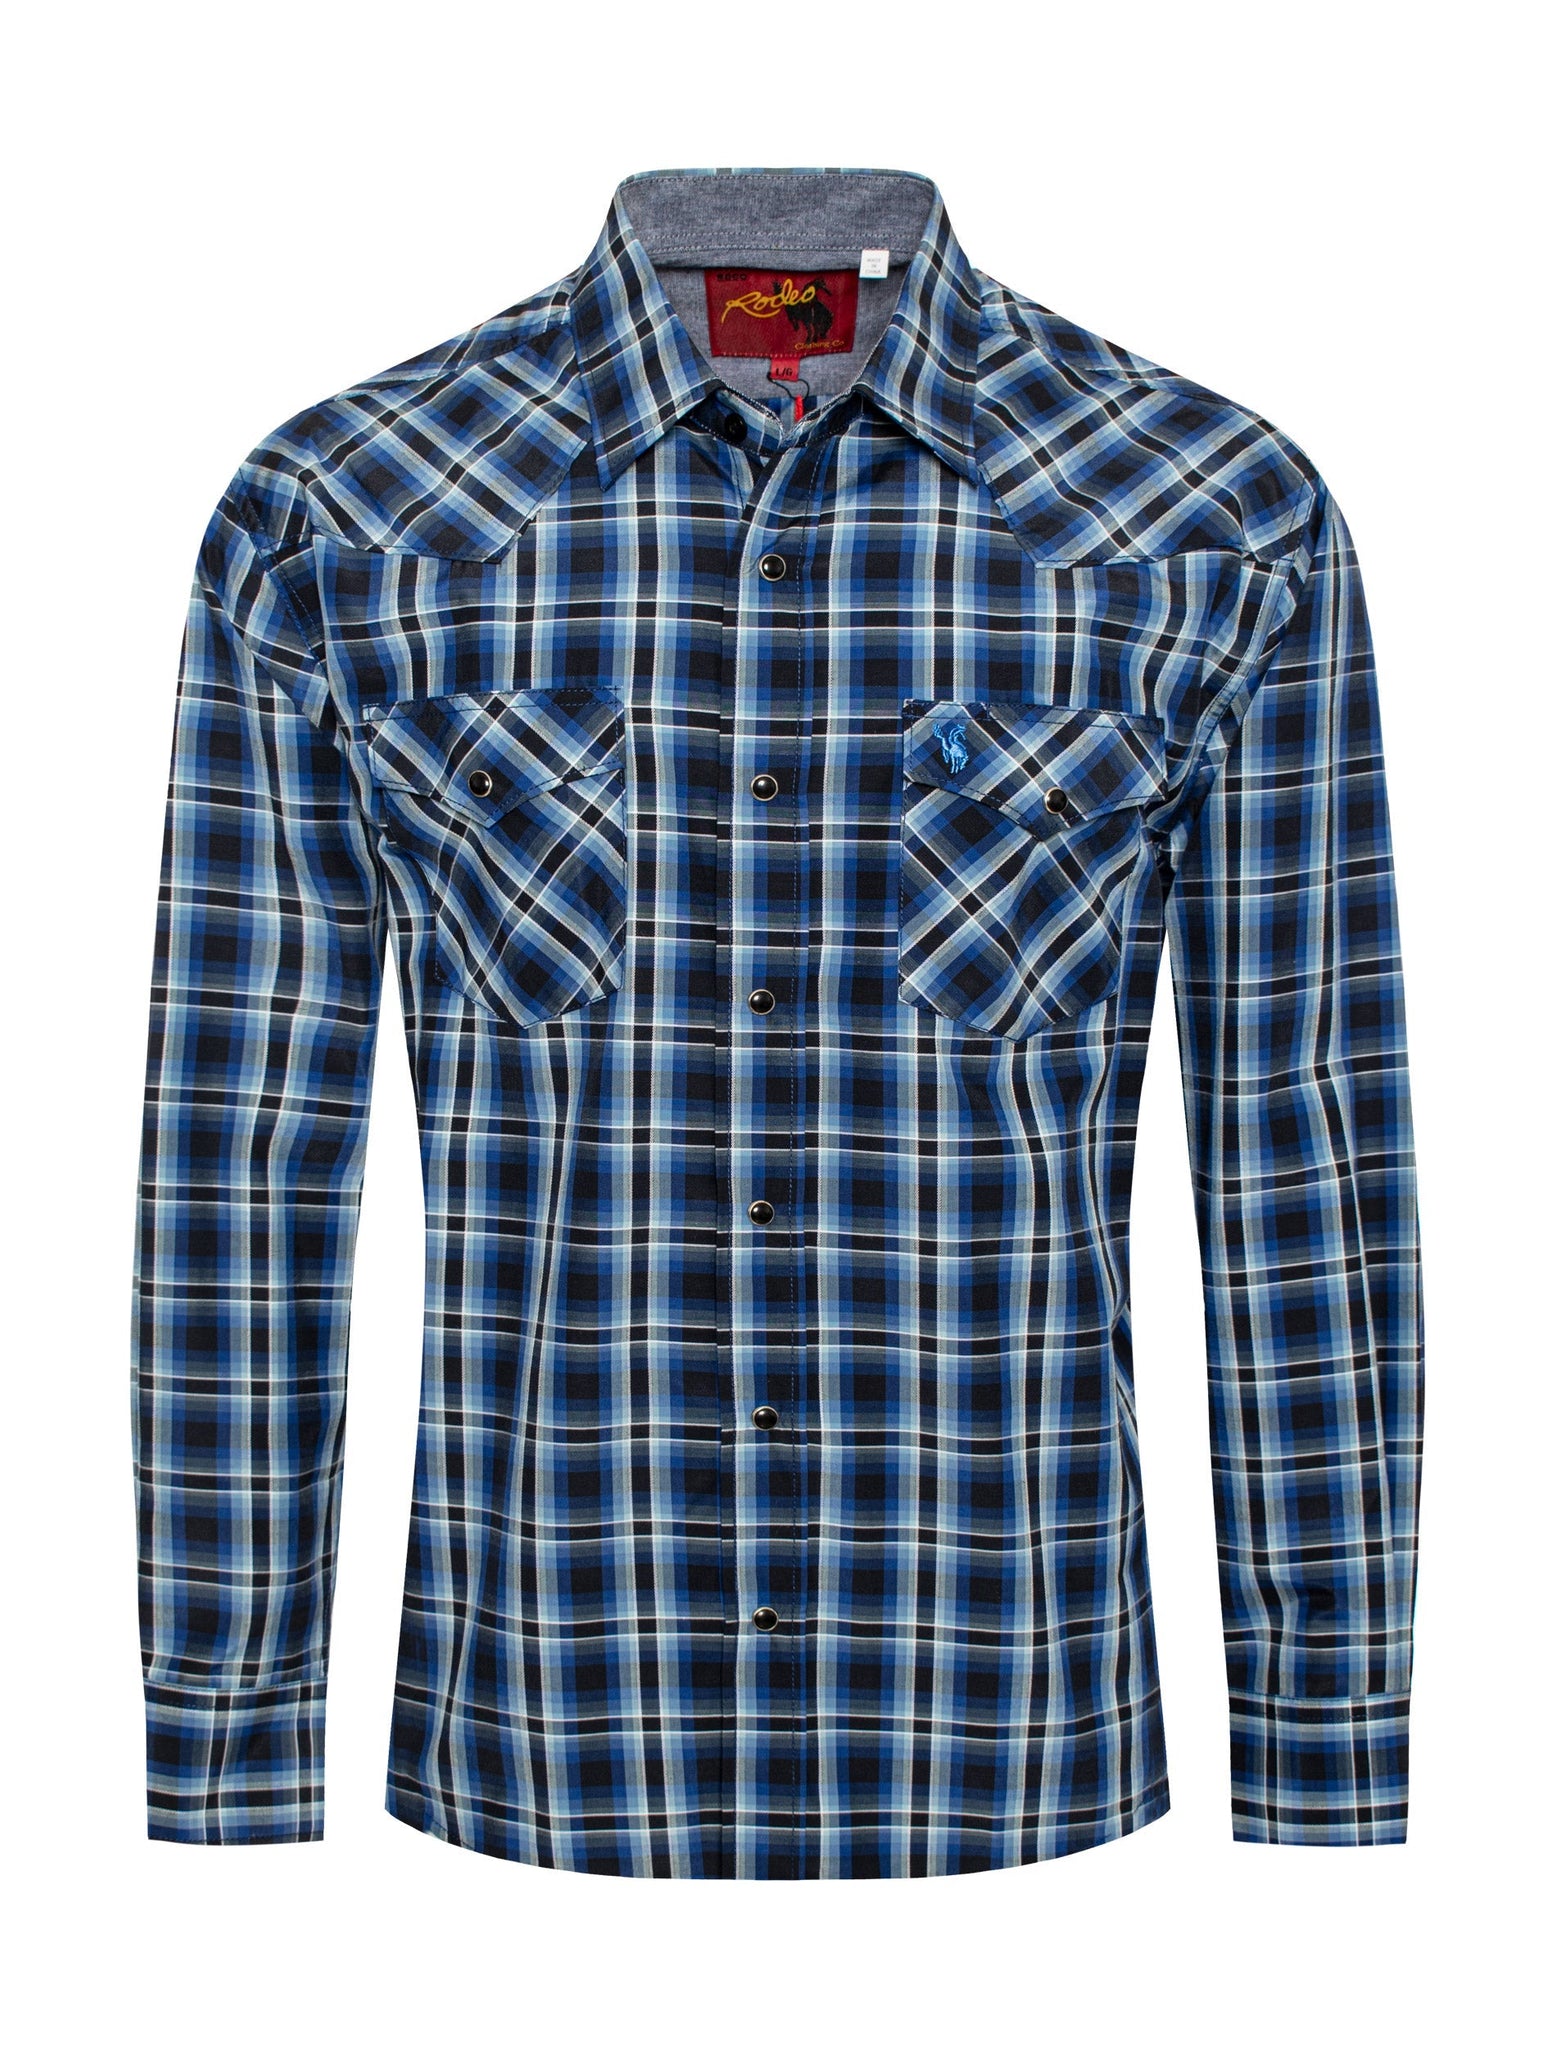 Men's Western Long Sleeve Pearl Snap Plaid Shirt -PS400-418